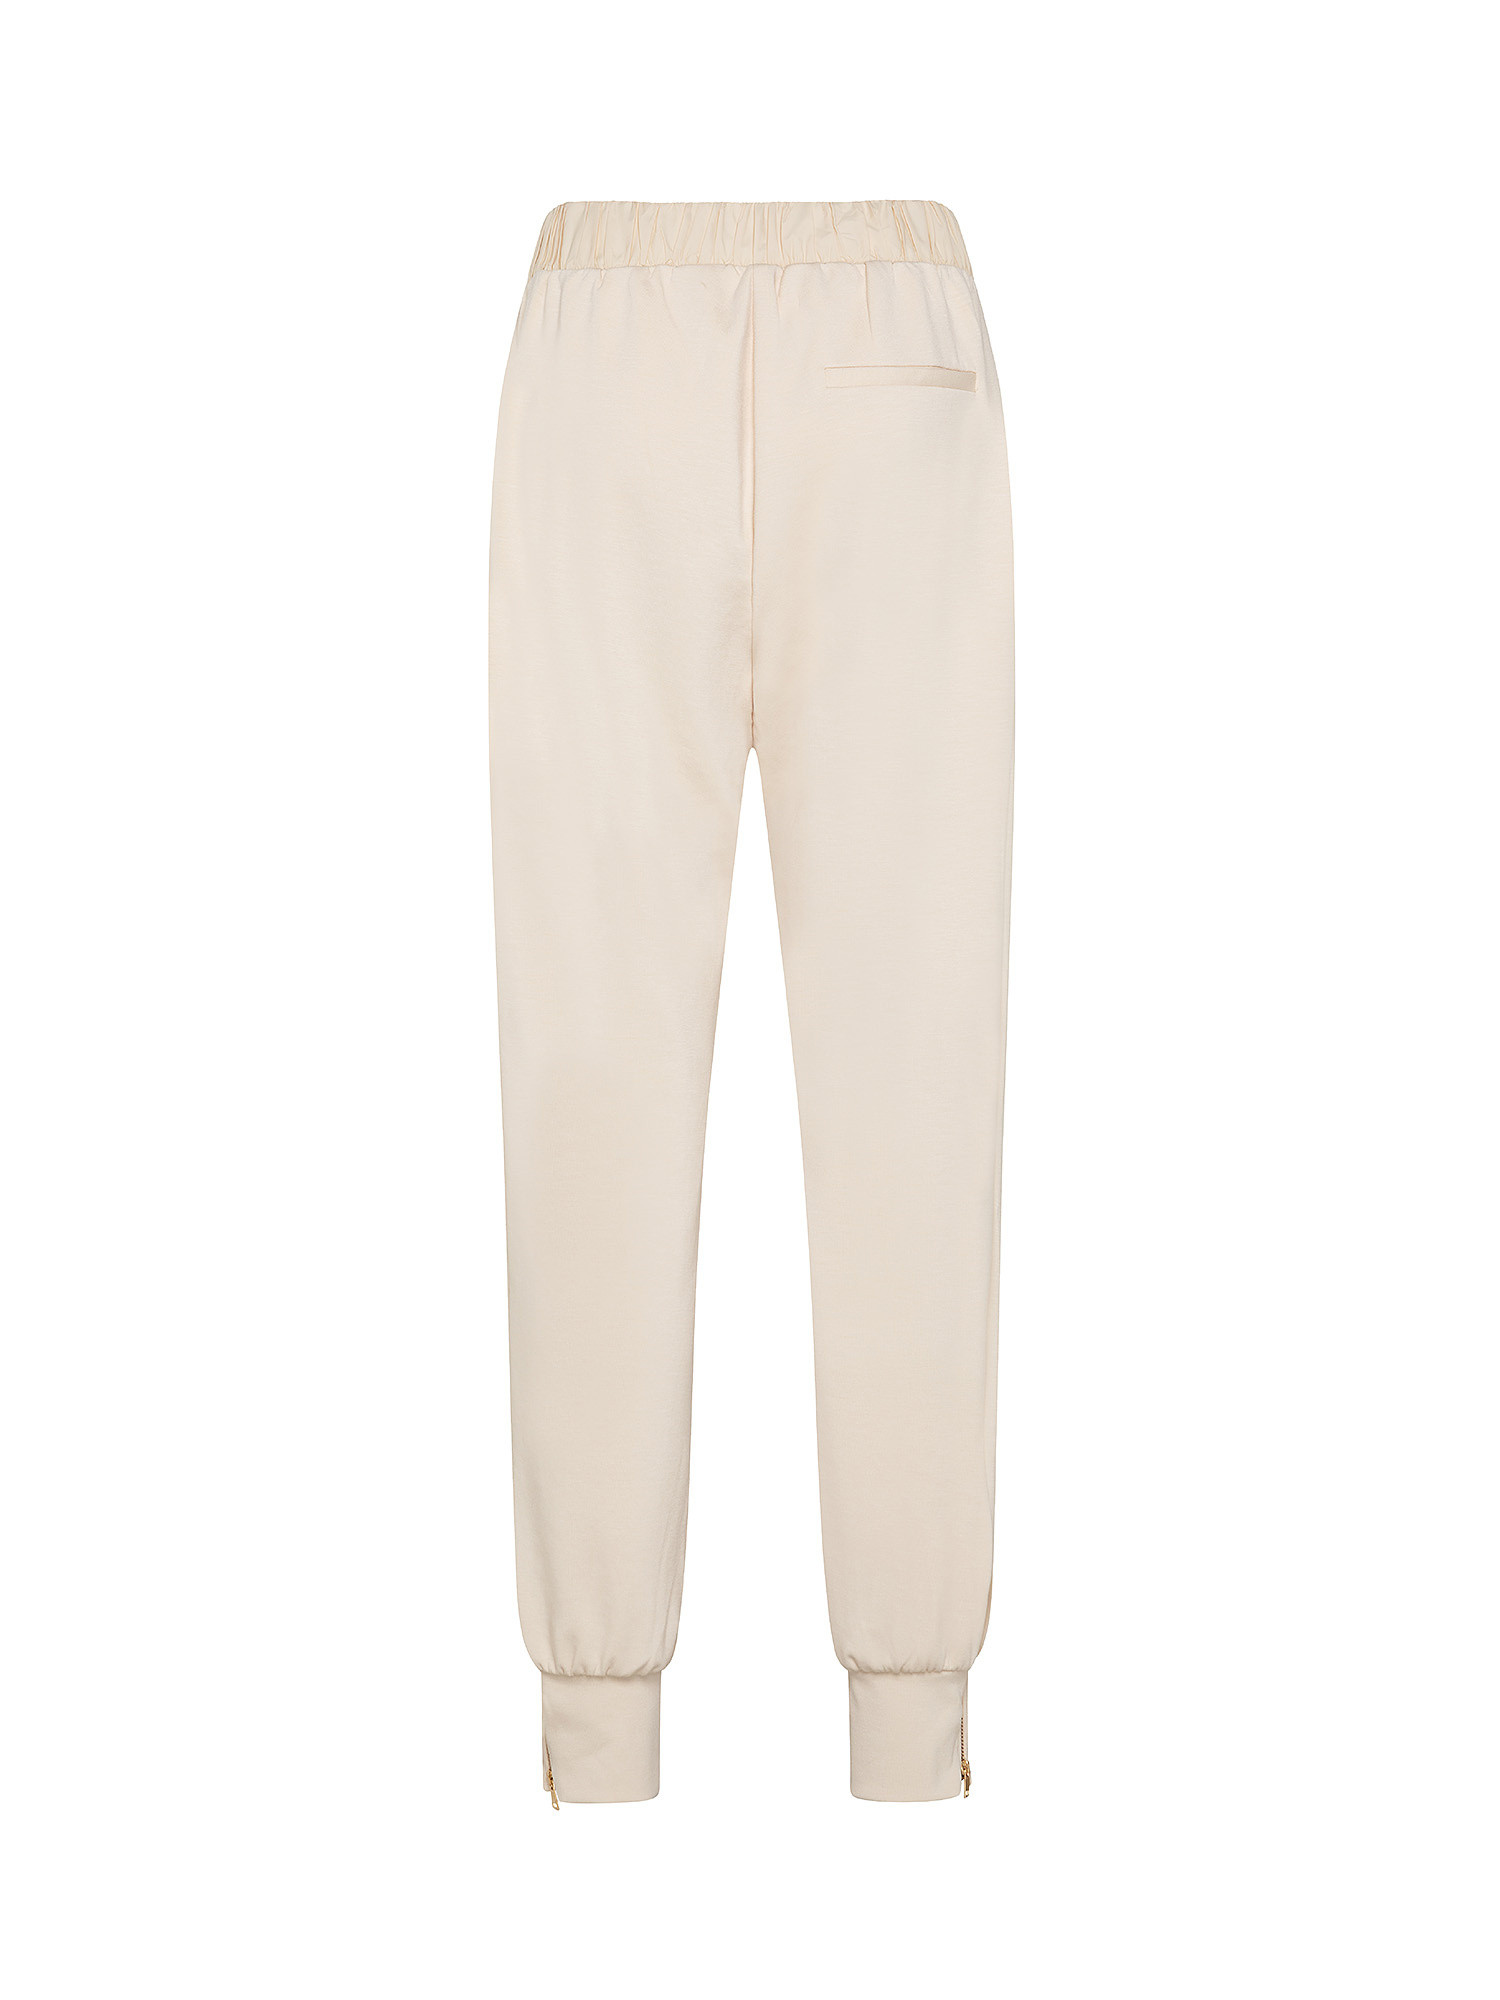 Pantaloni in maglia, Bianco ghiaccio, large image number 1